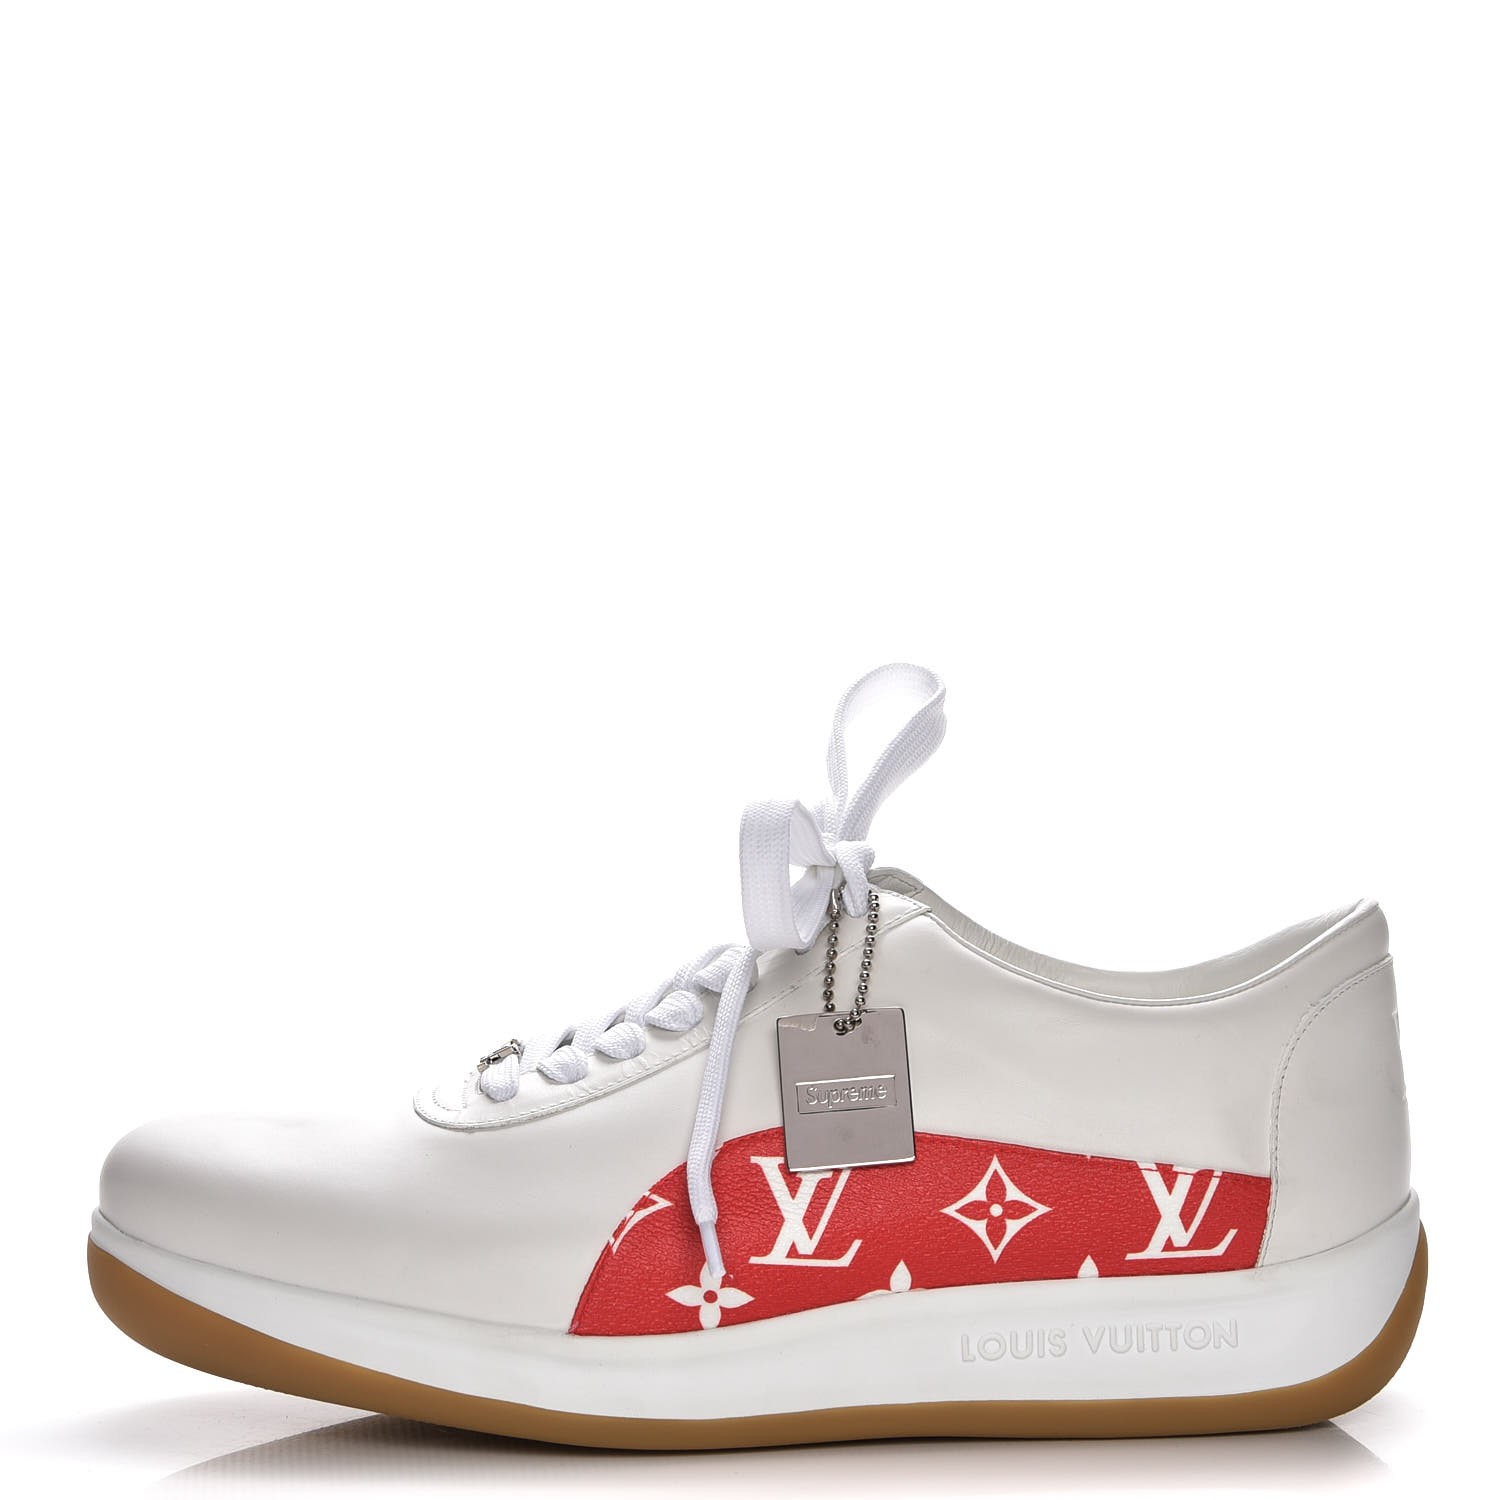 LOUIS VUITTON X SUPREME Calfskin Monogram Supreme Sneakers 9 White Red 216753